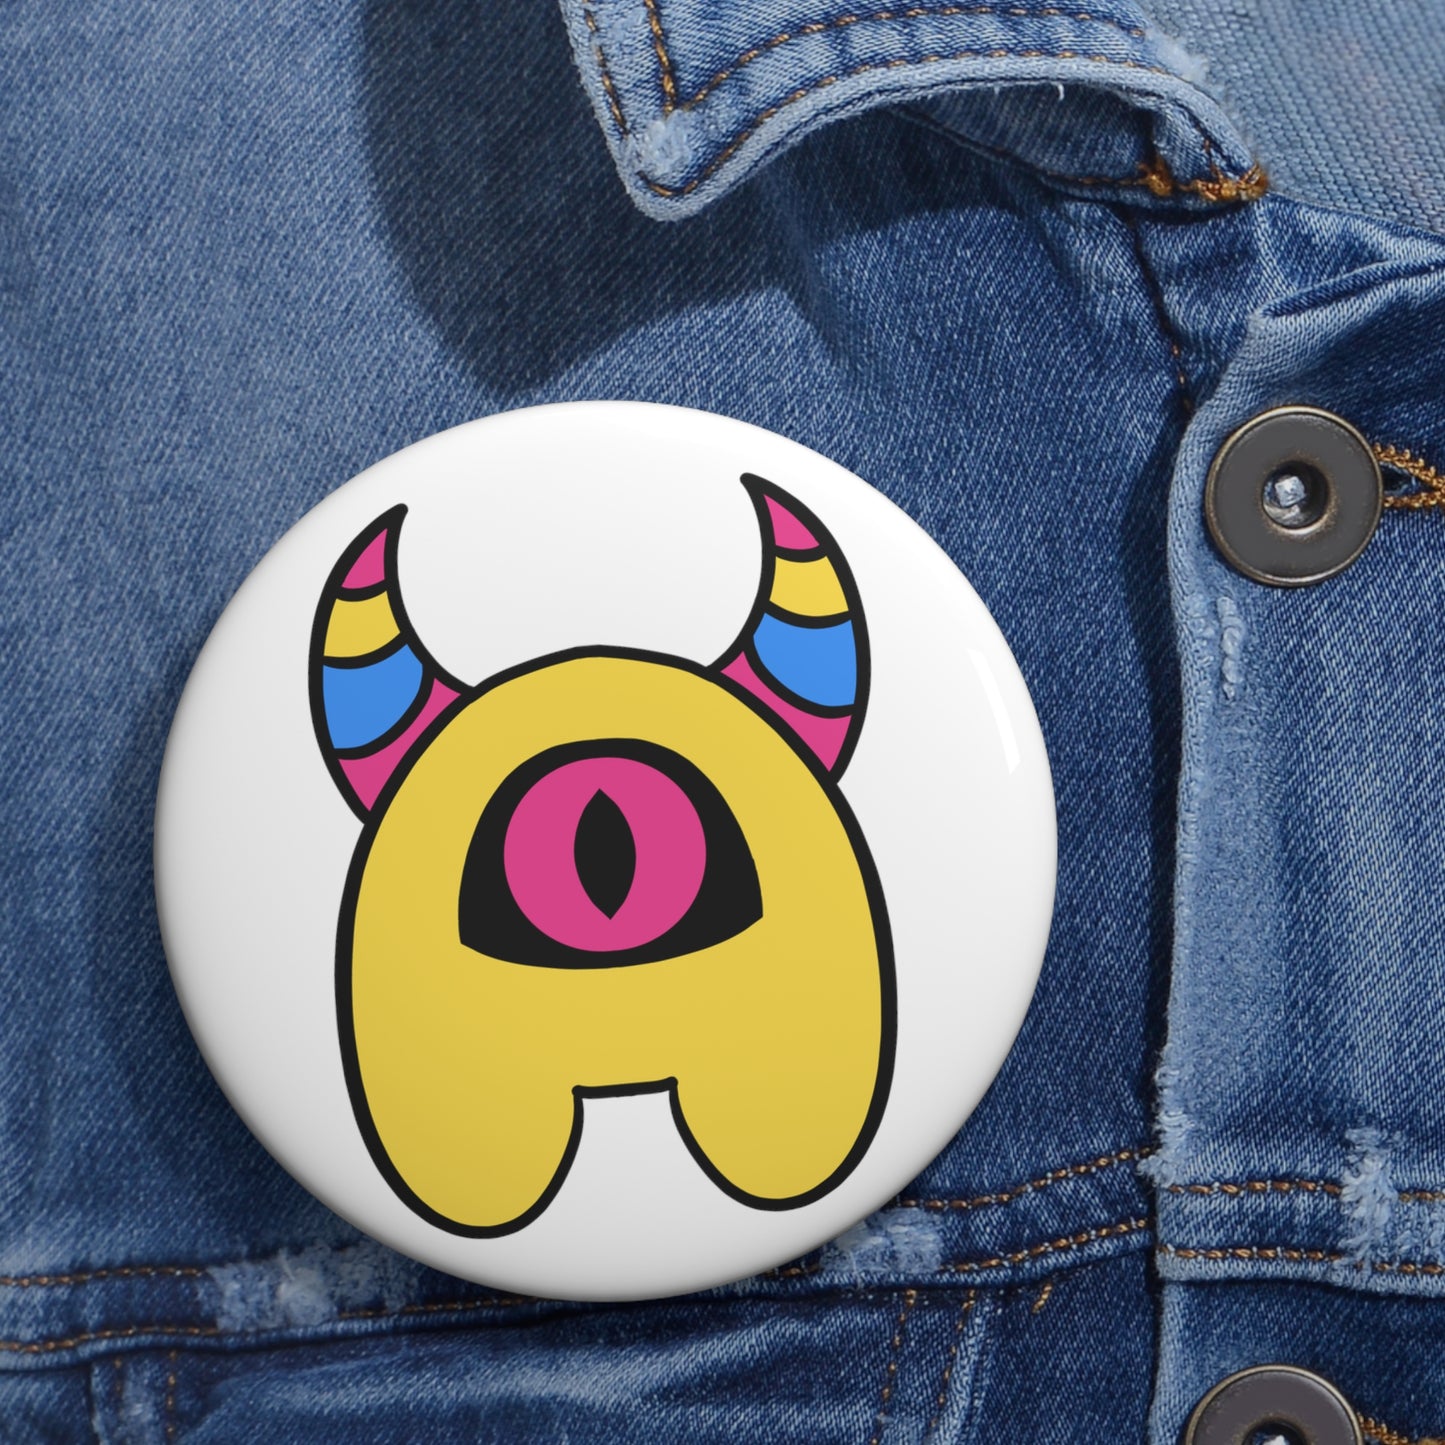 Pansexual Pride Pin Button | Minmon